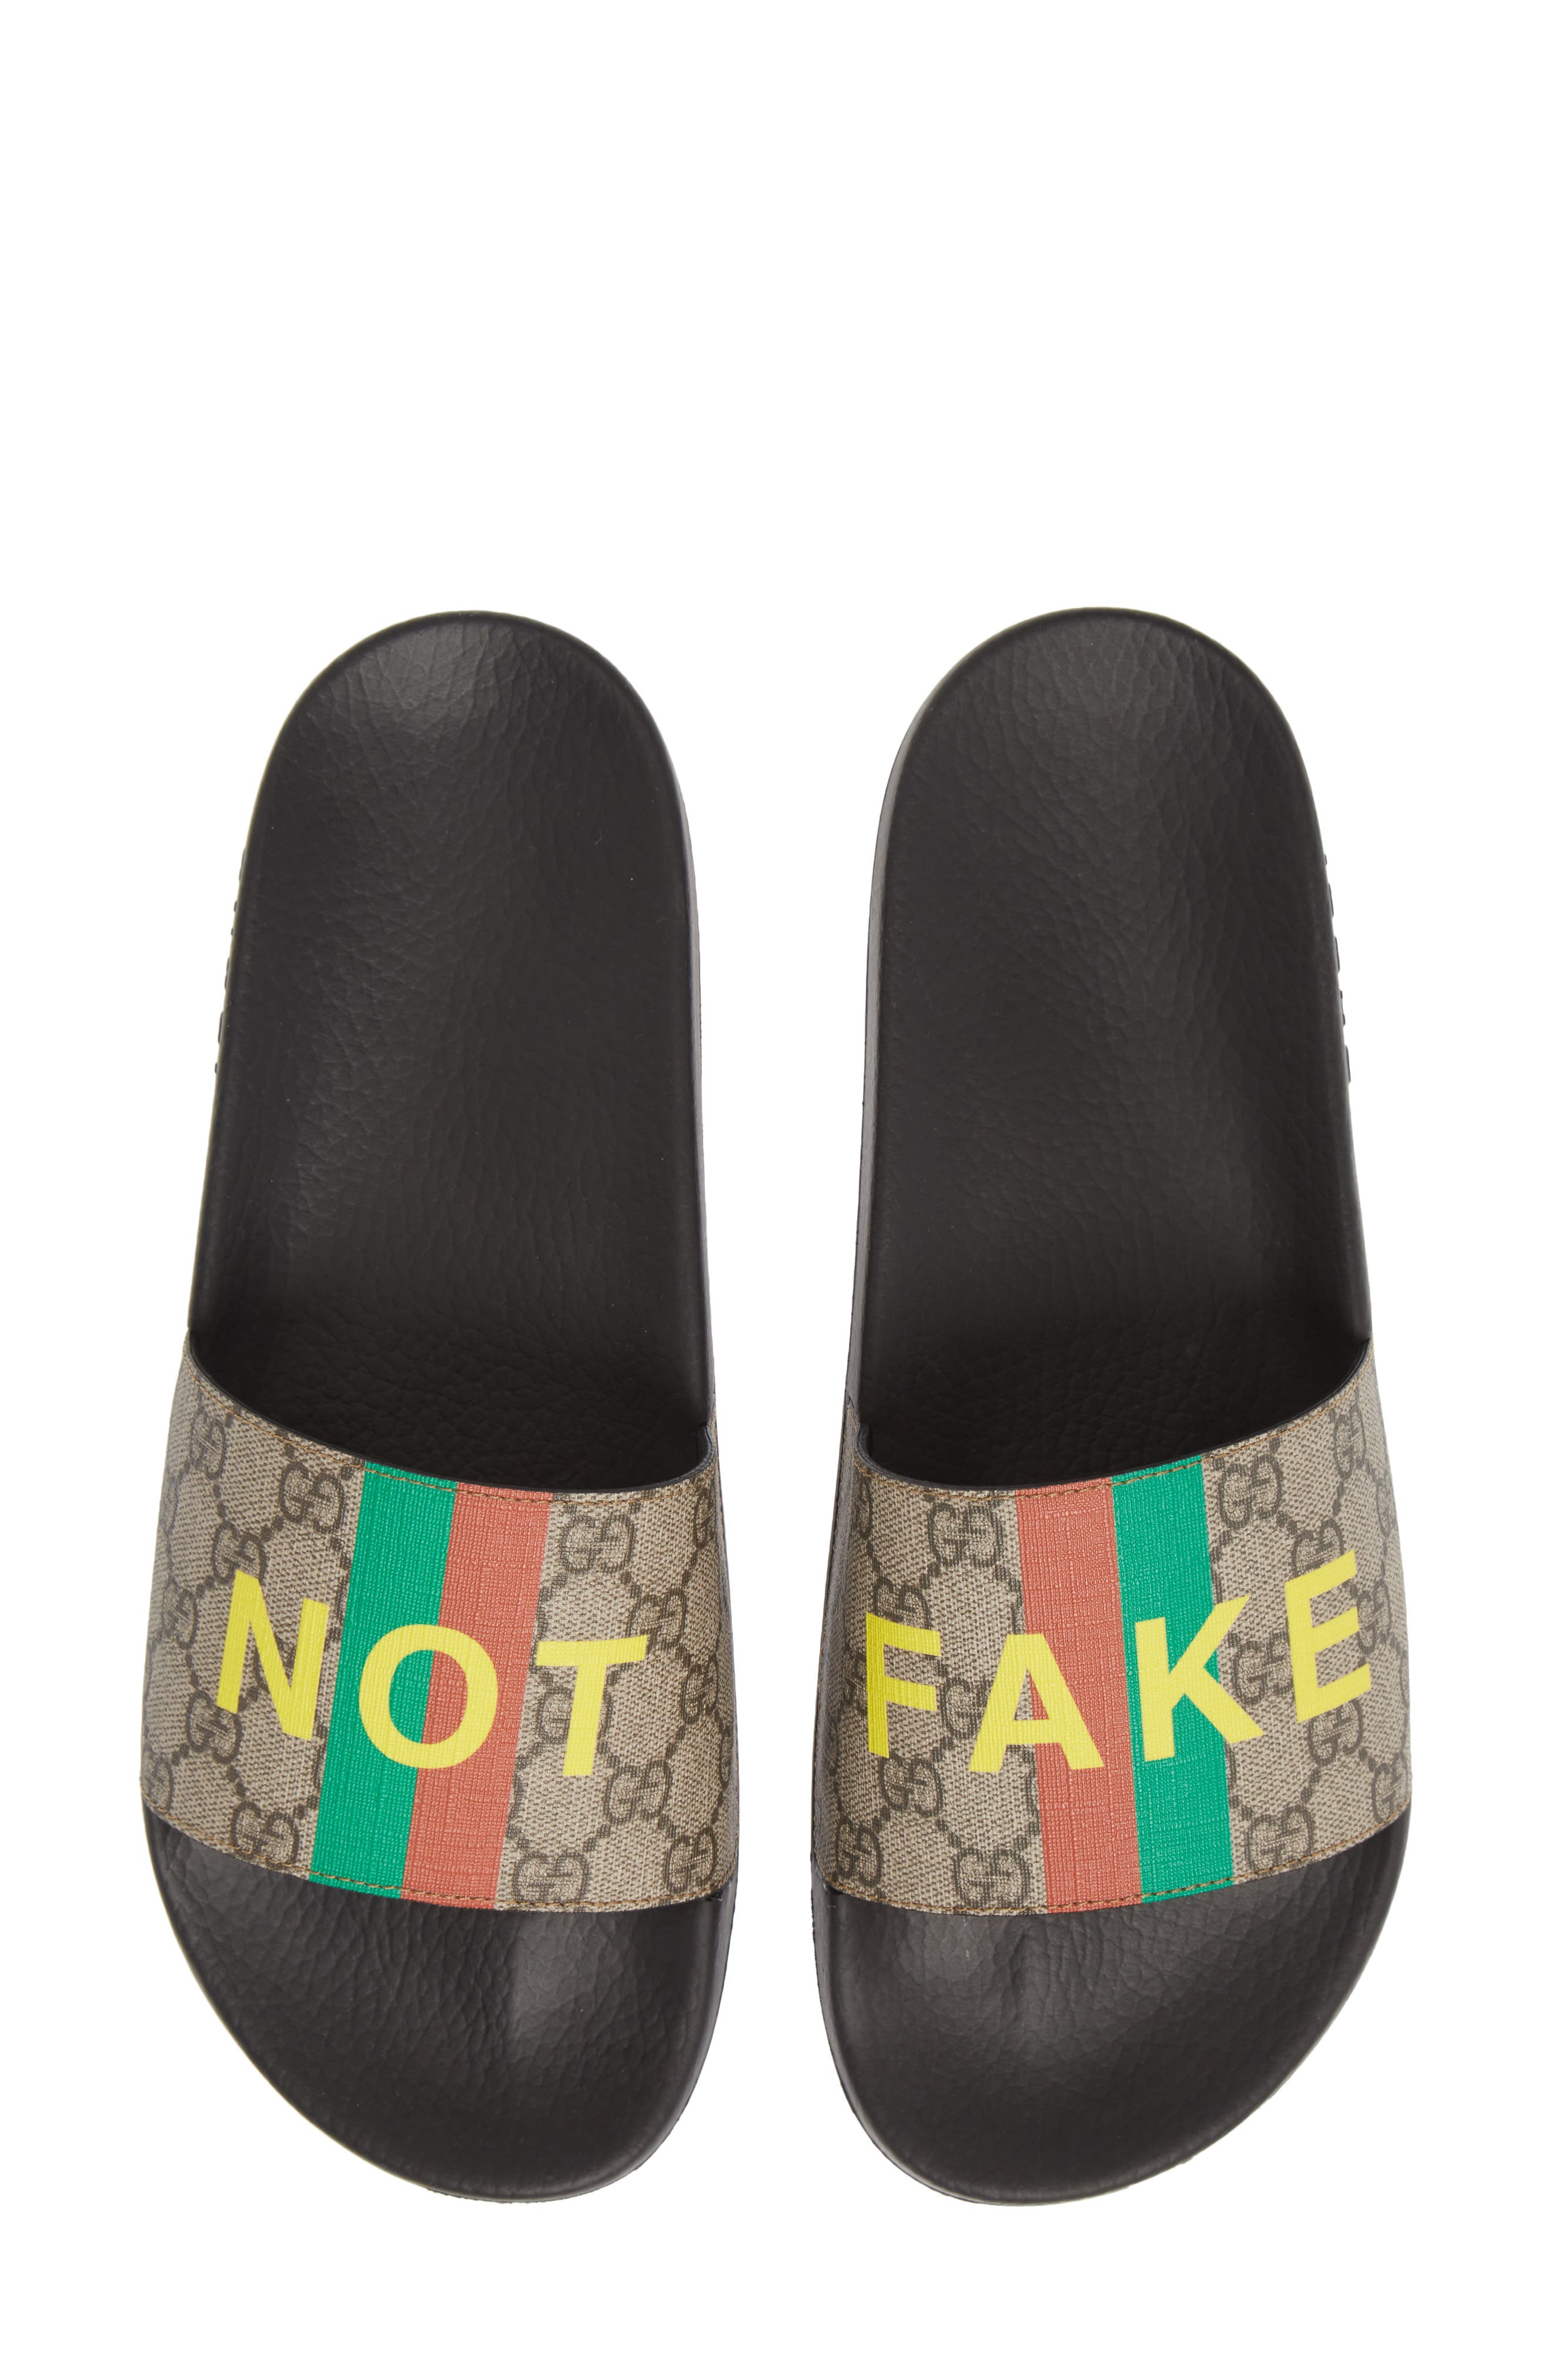 gucci sandals real vs fake